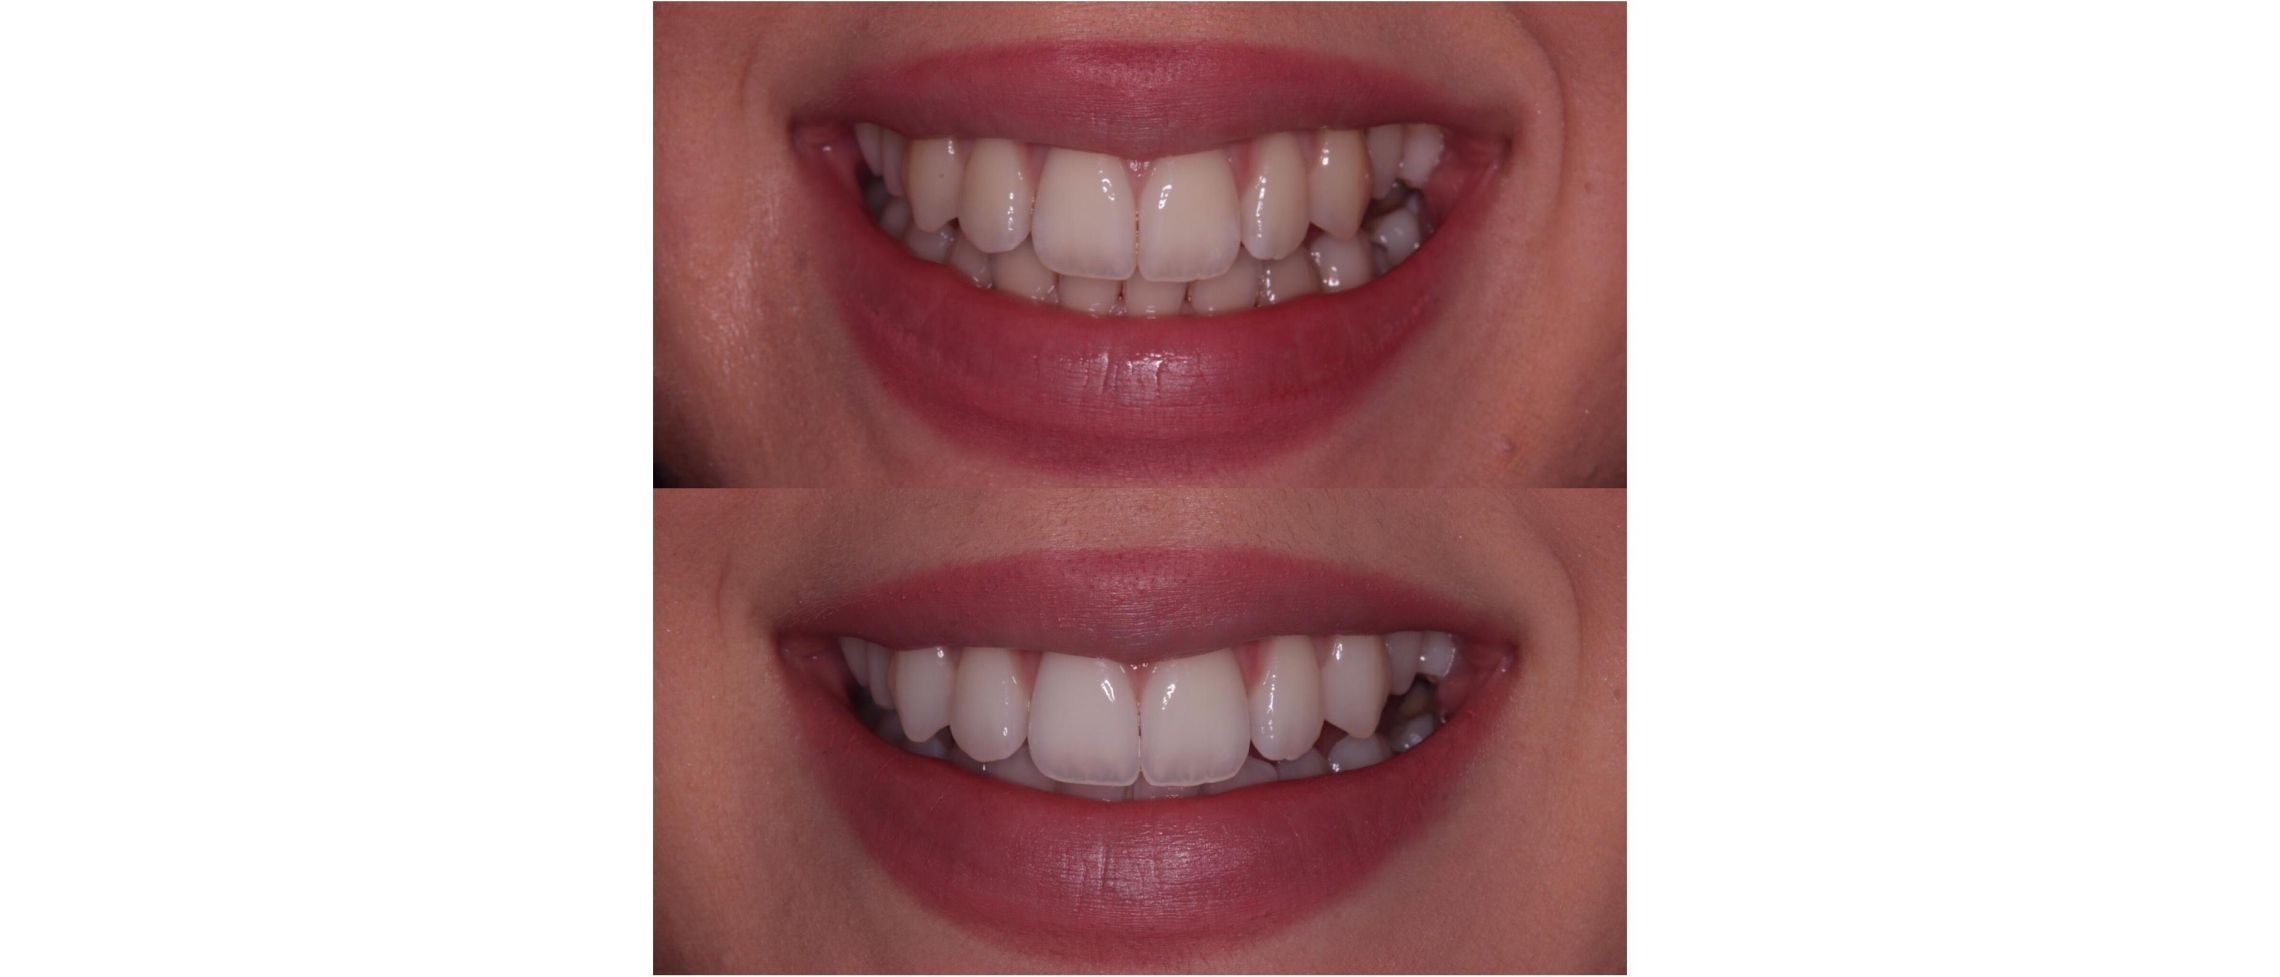 Teeth whitening 